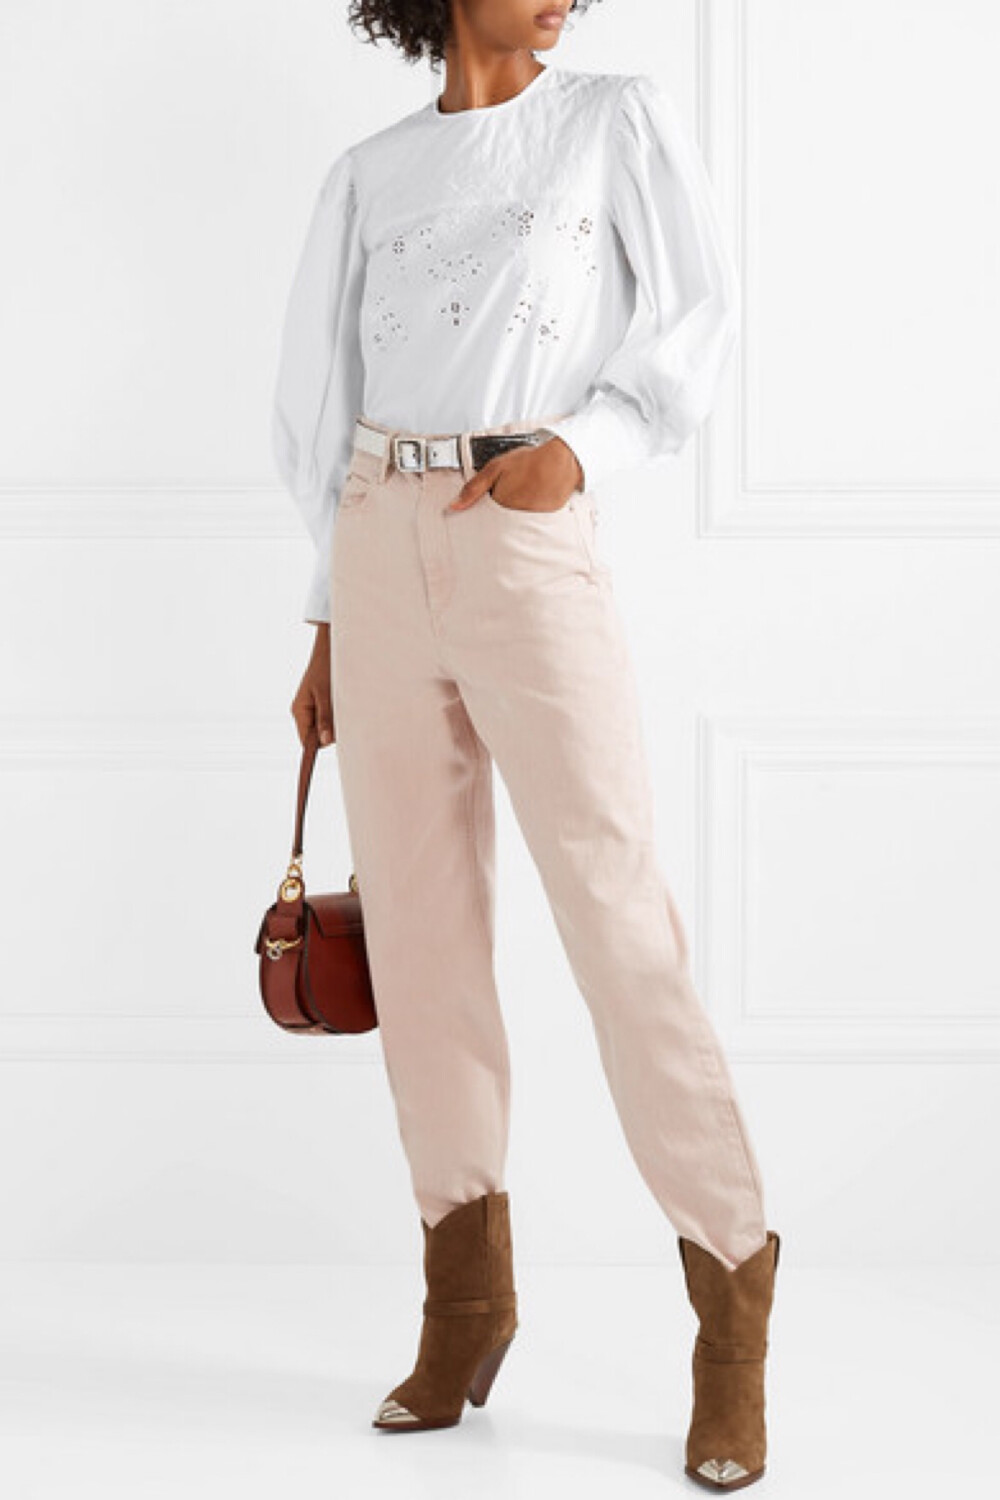 Isabel Marant Étoile 这款 “Wona” 女衫风格甜美，散发着波西米亚气息，尤为适合在天气宜人的城中或参加音乐节时穿着。单品裁自轻盈的白色纯棉府绸，绣有同色叶子，缩褶束口袖倍添时髦韵味。不妨搭配短裤，或将它扎入牛仔裤中。